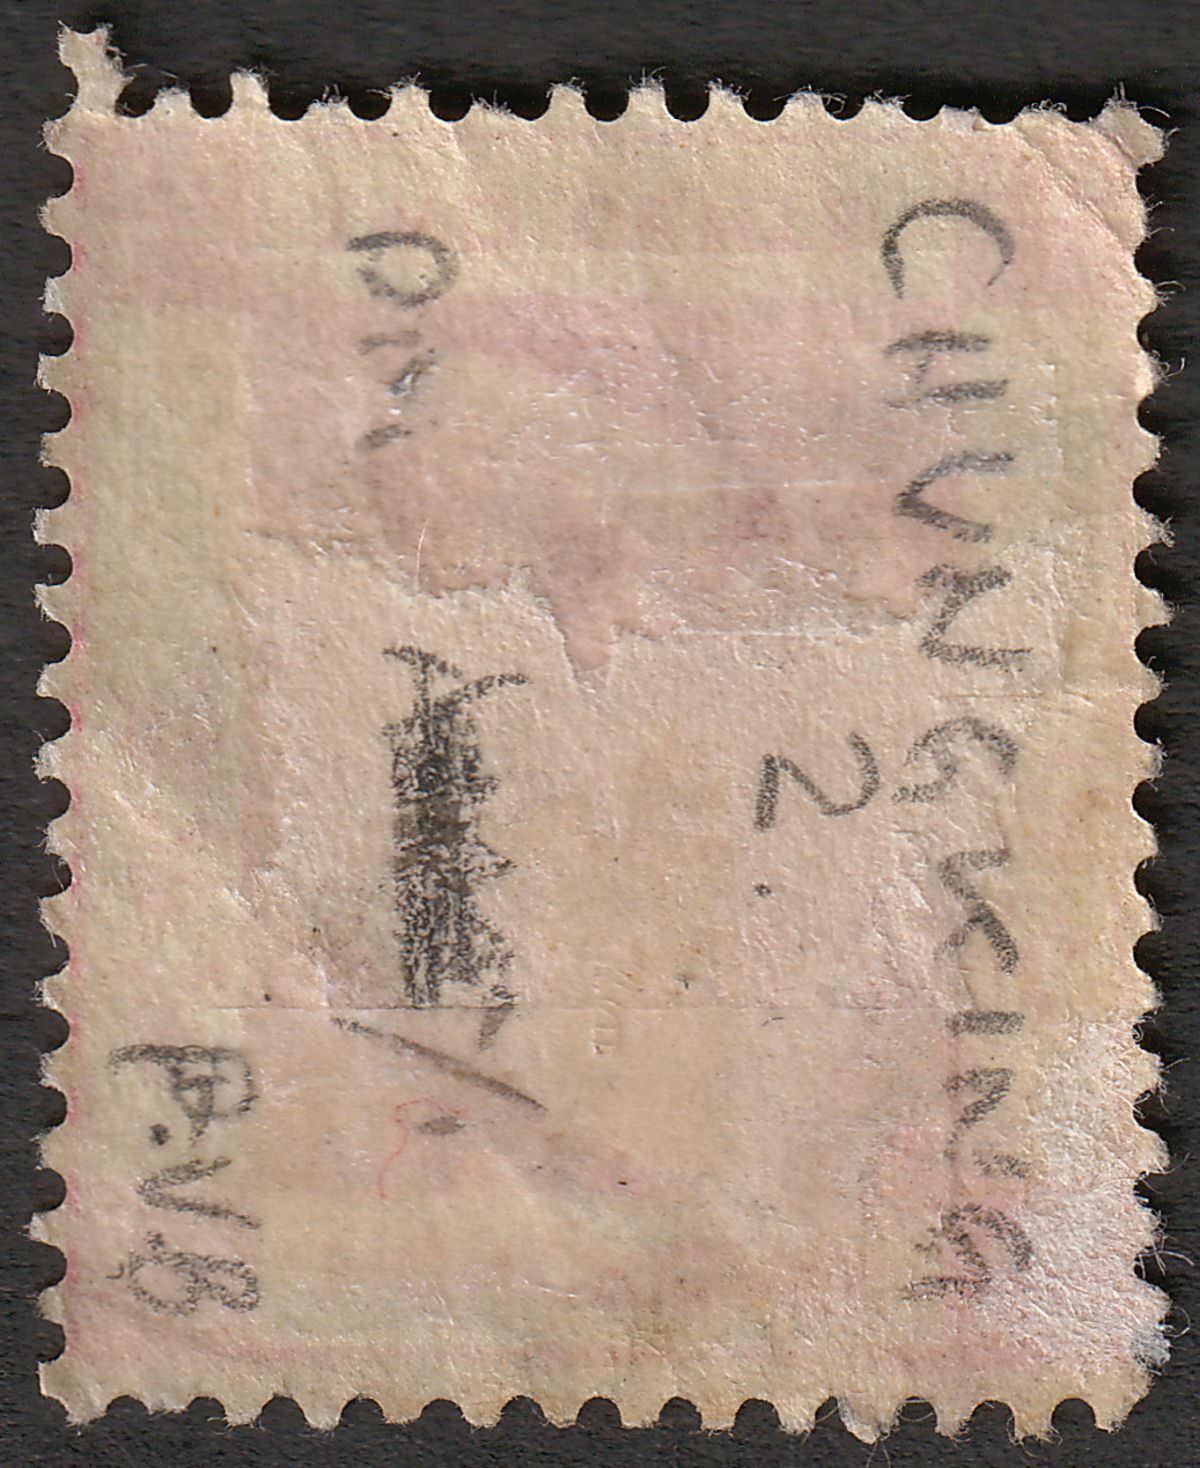 Hong Kong 1899 QV 2c Used with Chungking IPO Mark (2) + Shanghai Postmarks